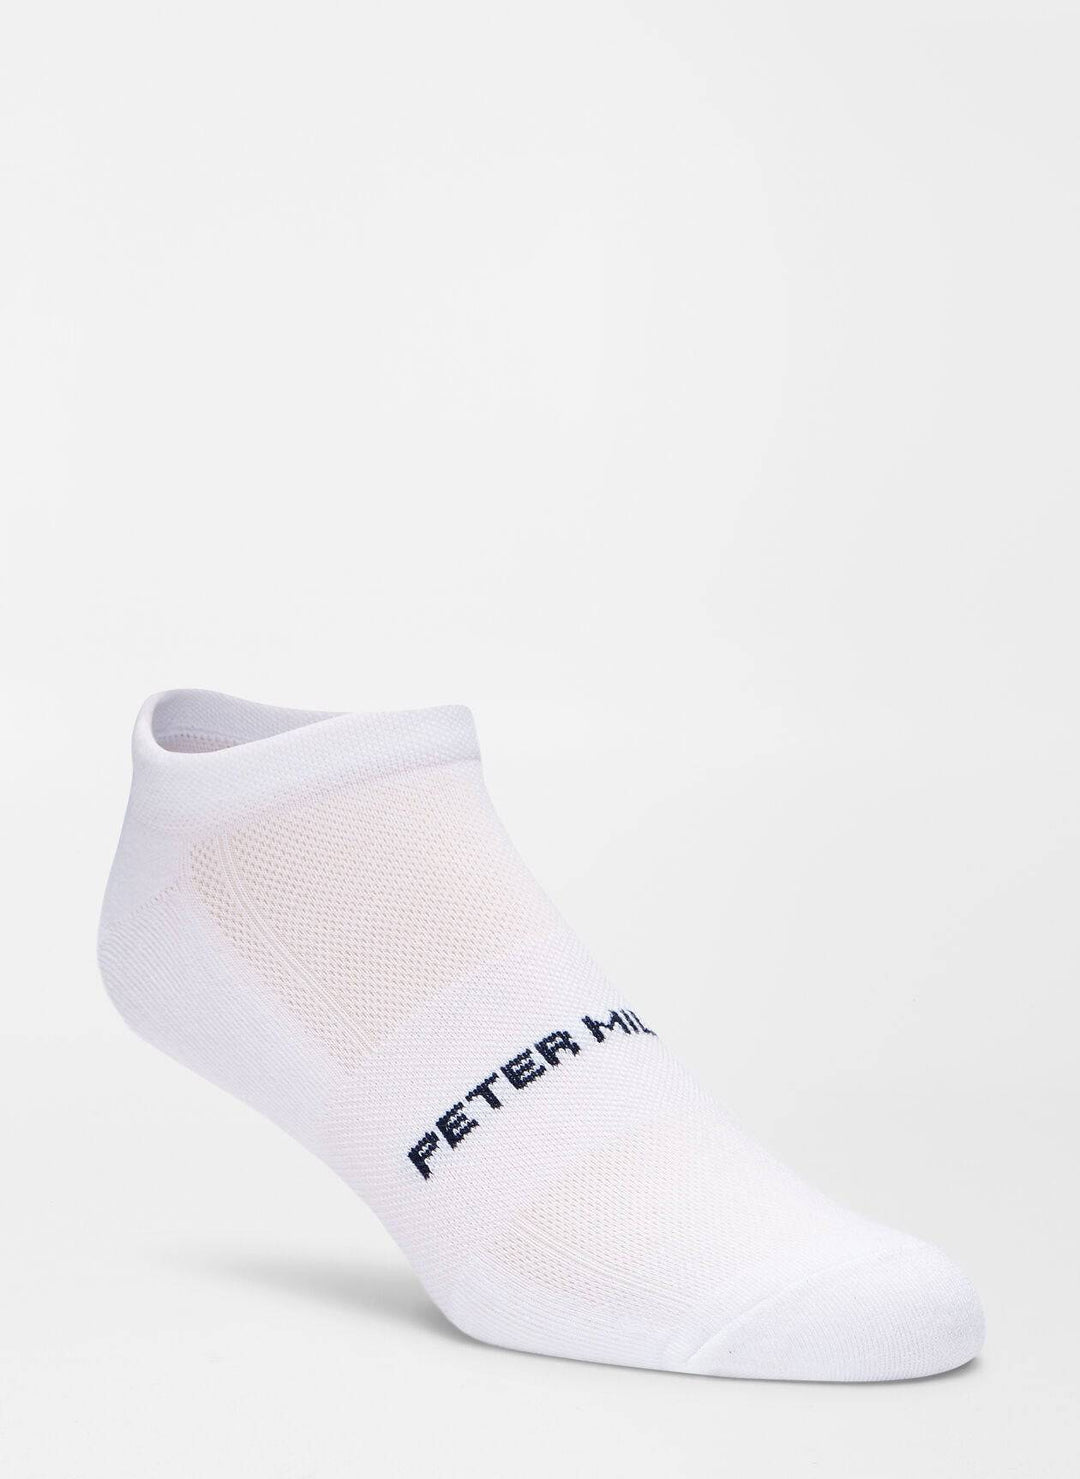 Peter Millar Two-Pack Performance Sock